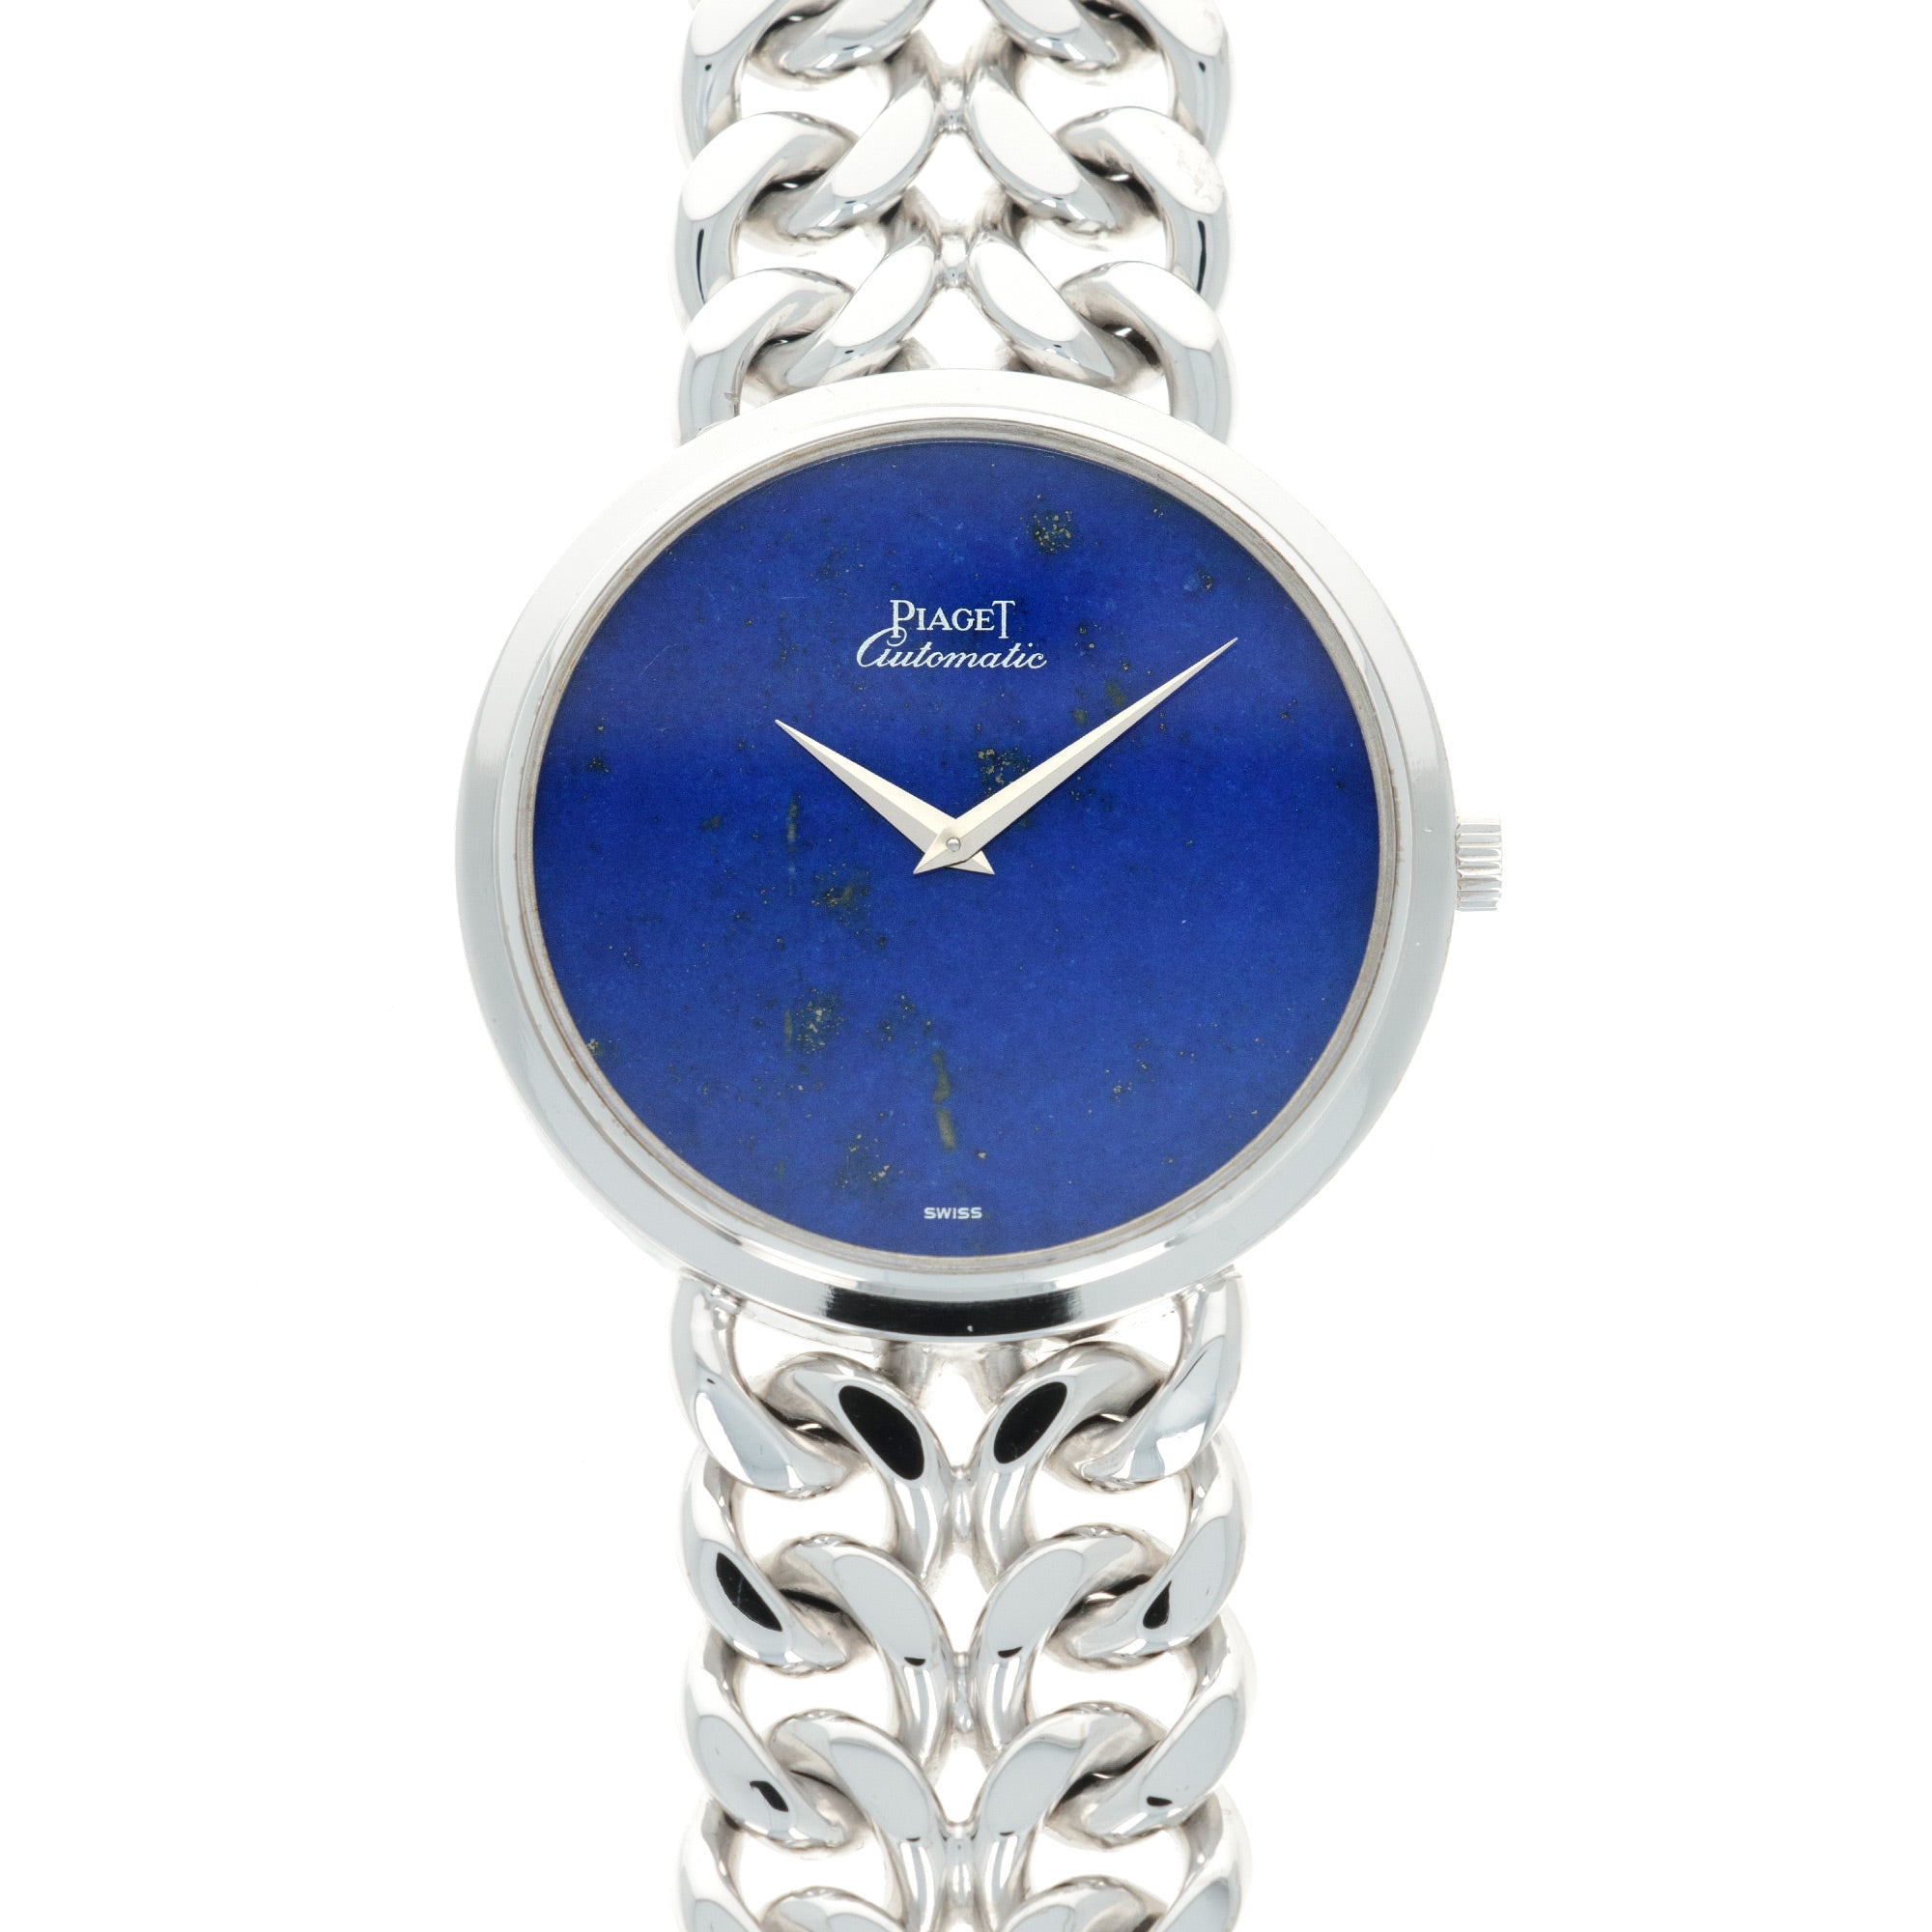 Piaget - Piaget White Gold Lapis Link Bracelet Watch - The Keystone Watches